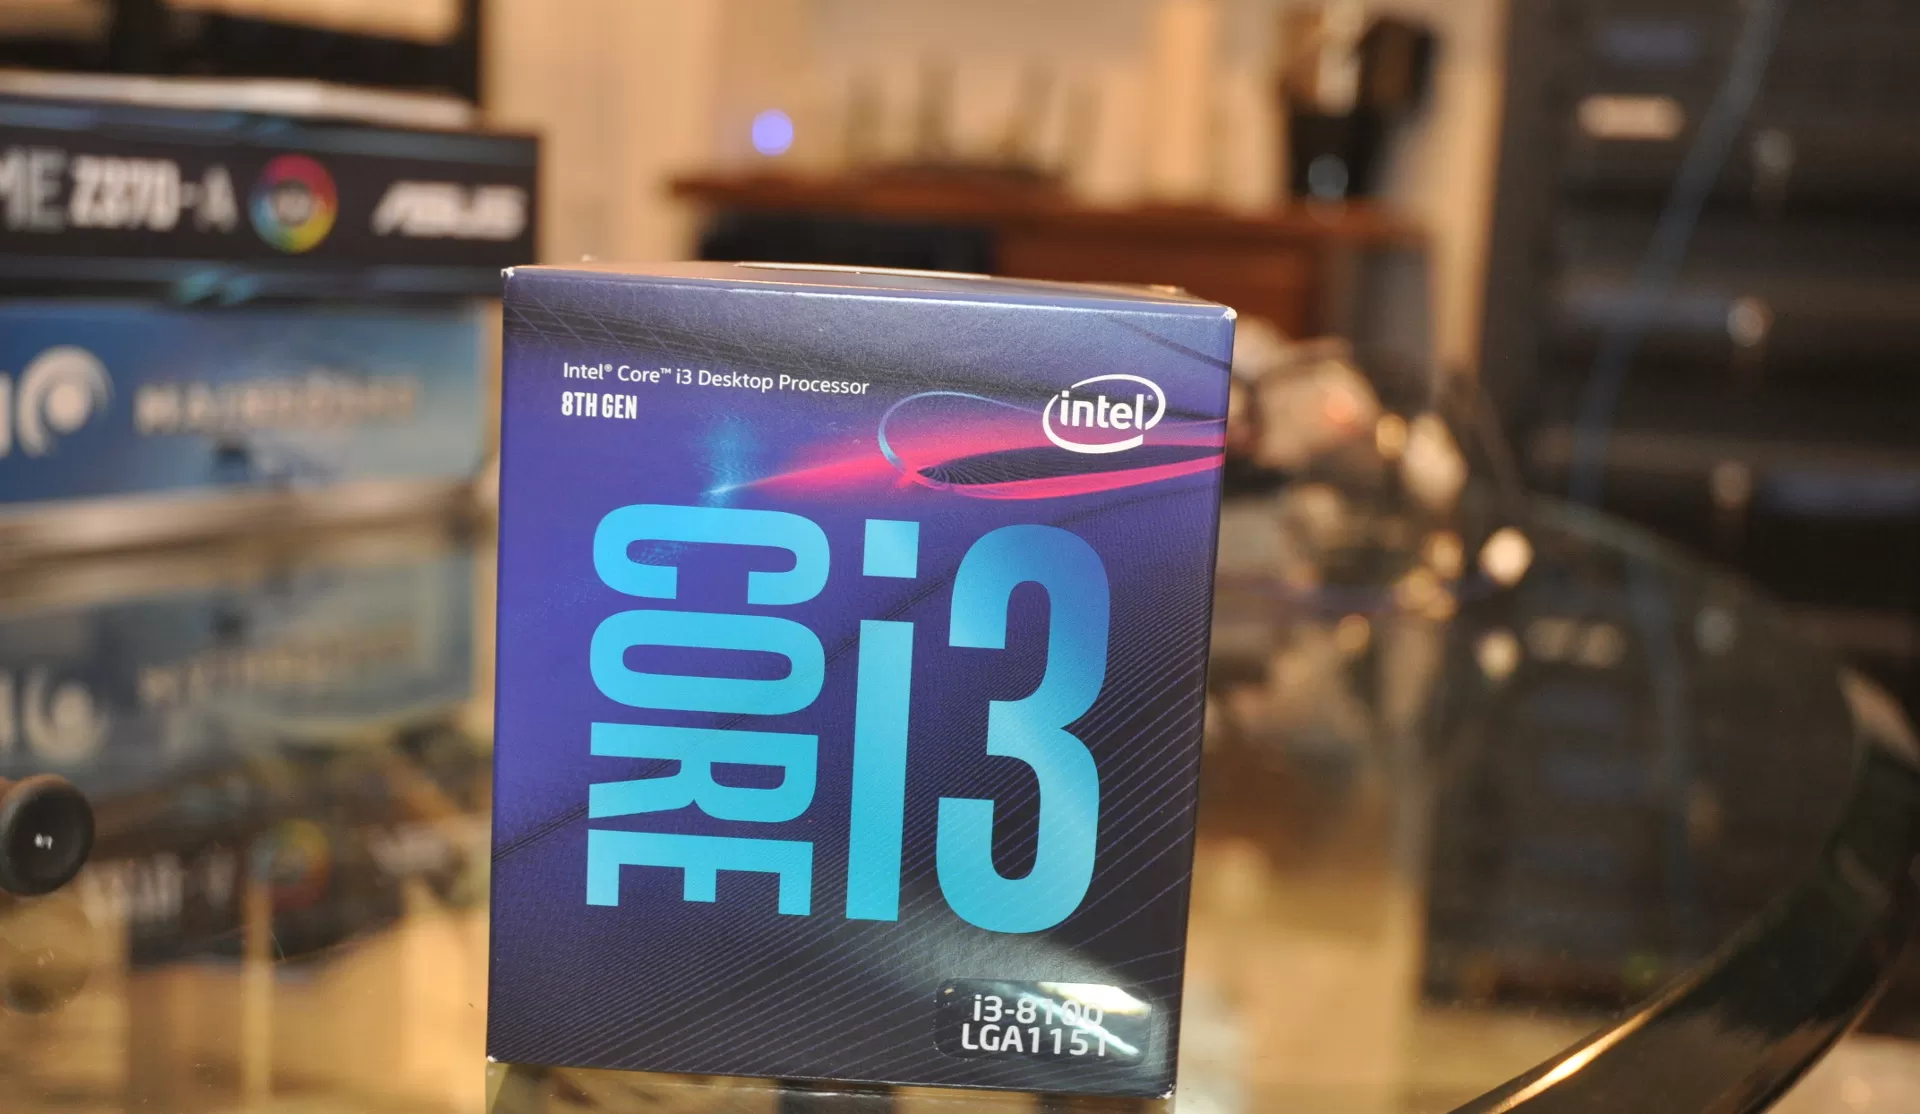 Intel Core i3-8100. ПК Intel Core i3 8100. Core i7 UHD. Intel(r) Core(TM) i3-8100 CPU @ 3.60GHZ 3.60 GHZ.